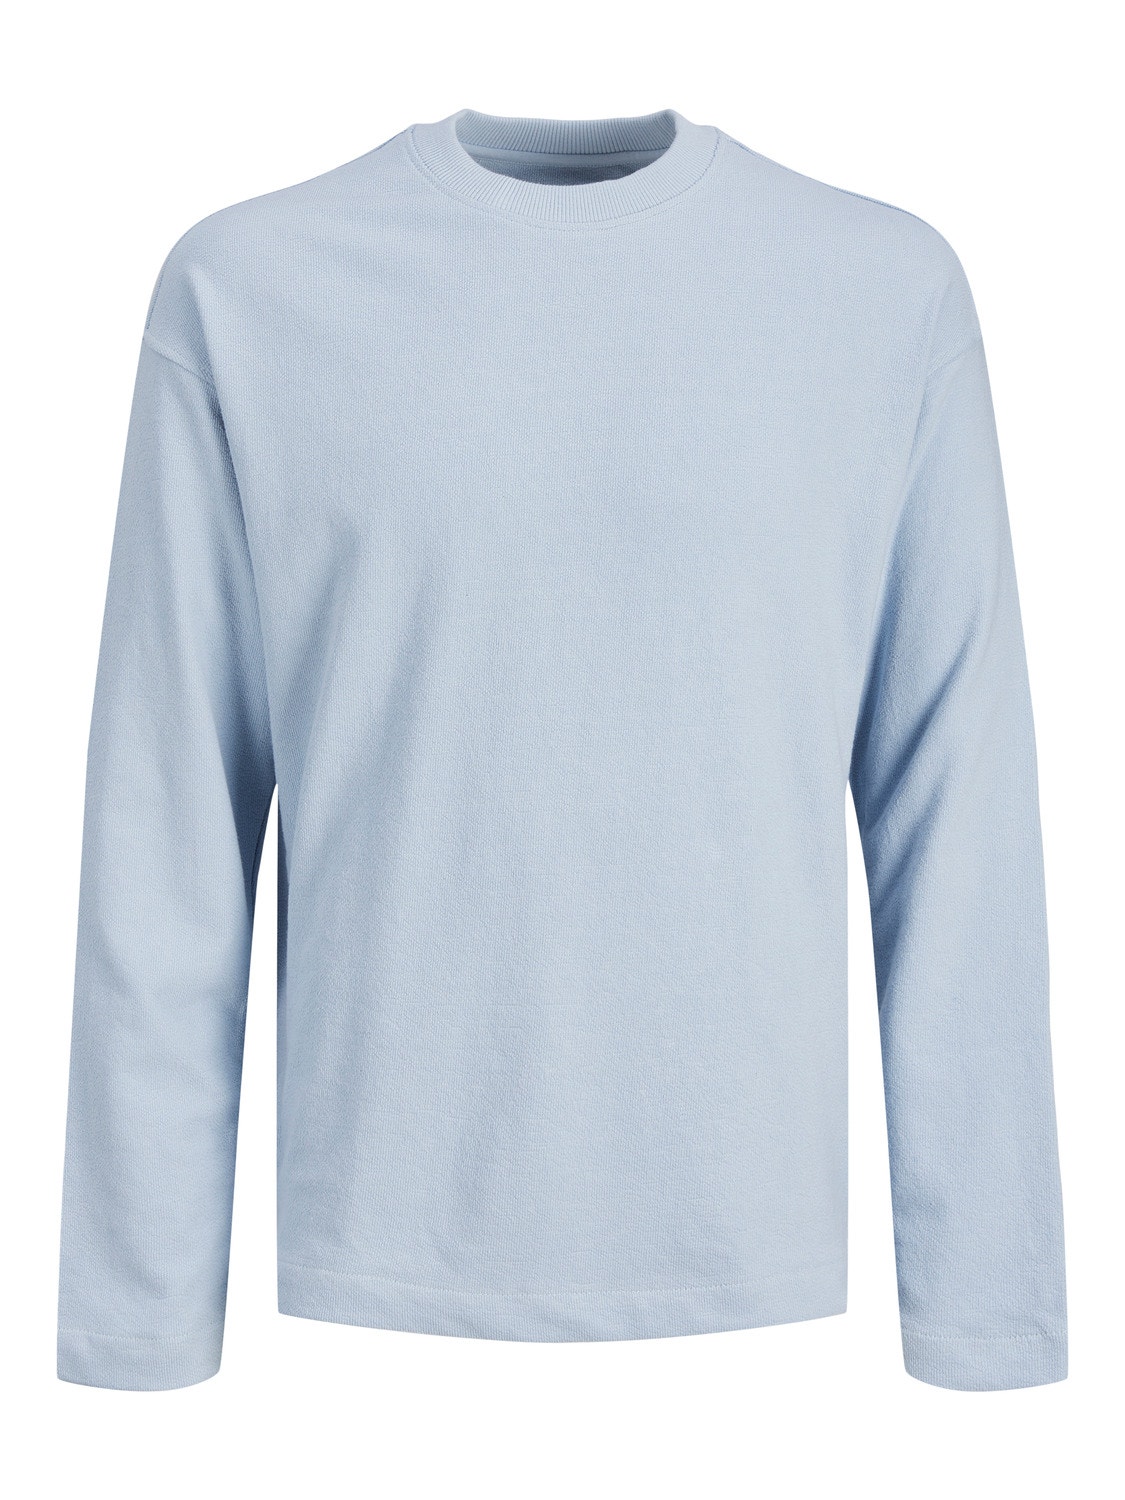 Jack & Jones Plain Crew neck Sweatshirt -Cashmere Blue - 12233472